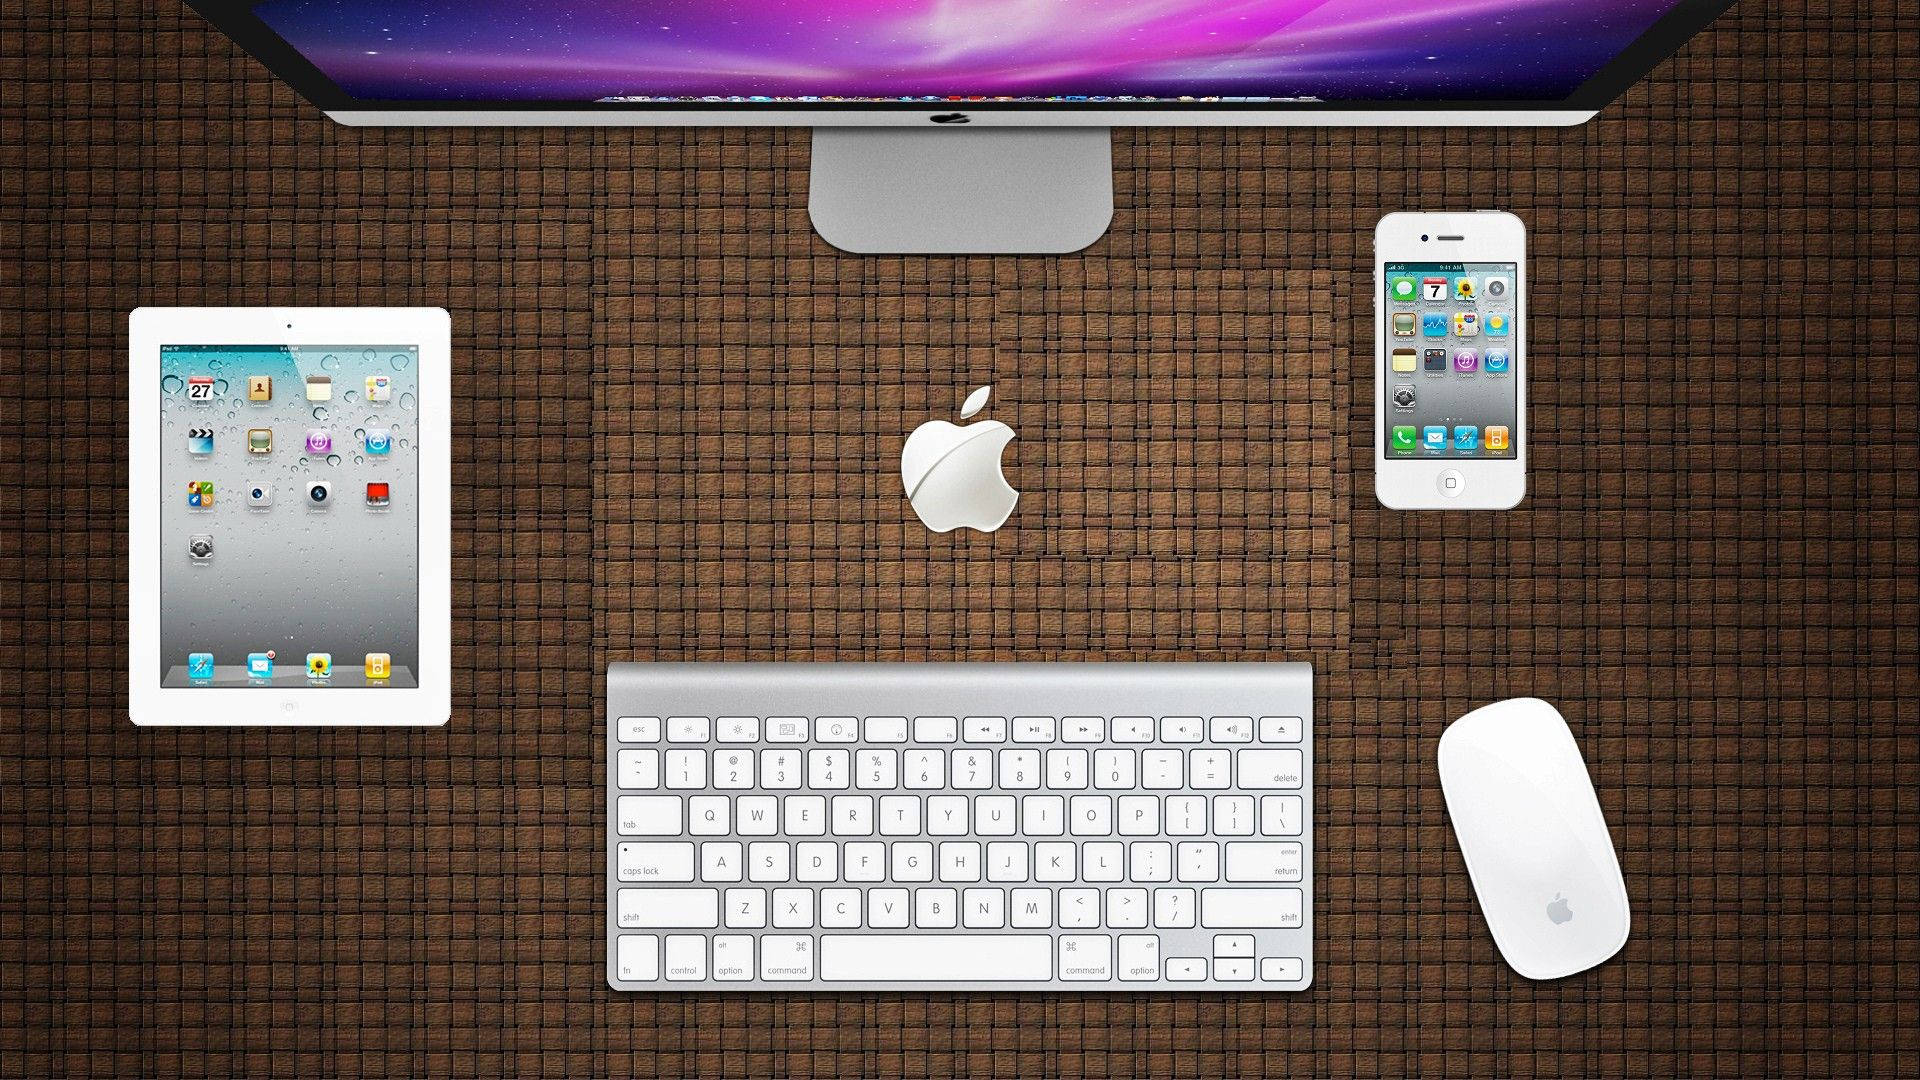 Apple Products Office Desk Set-up Wallpaper